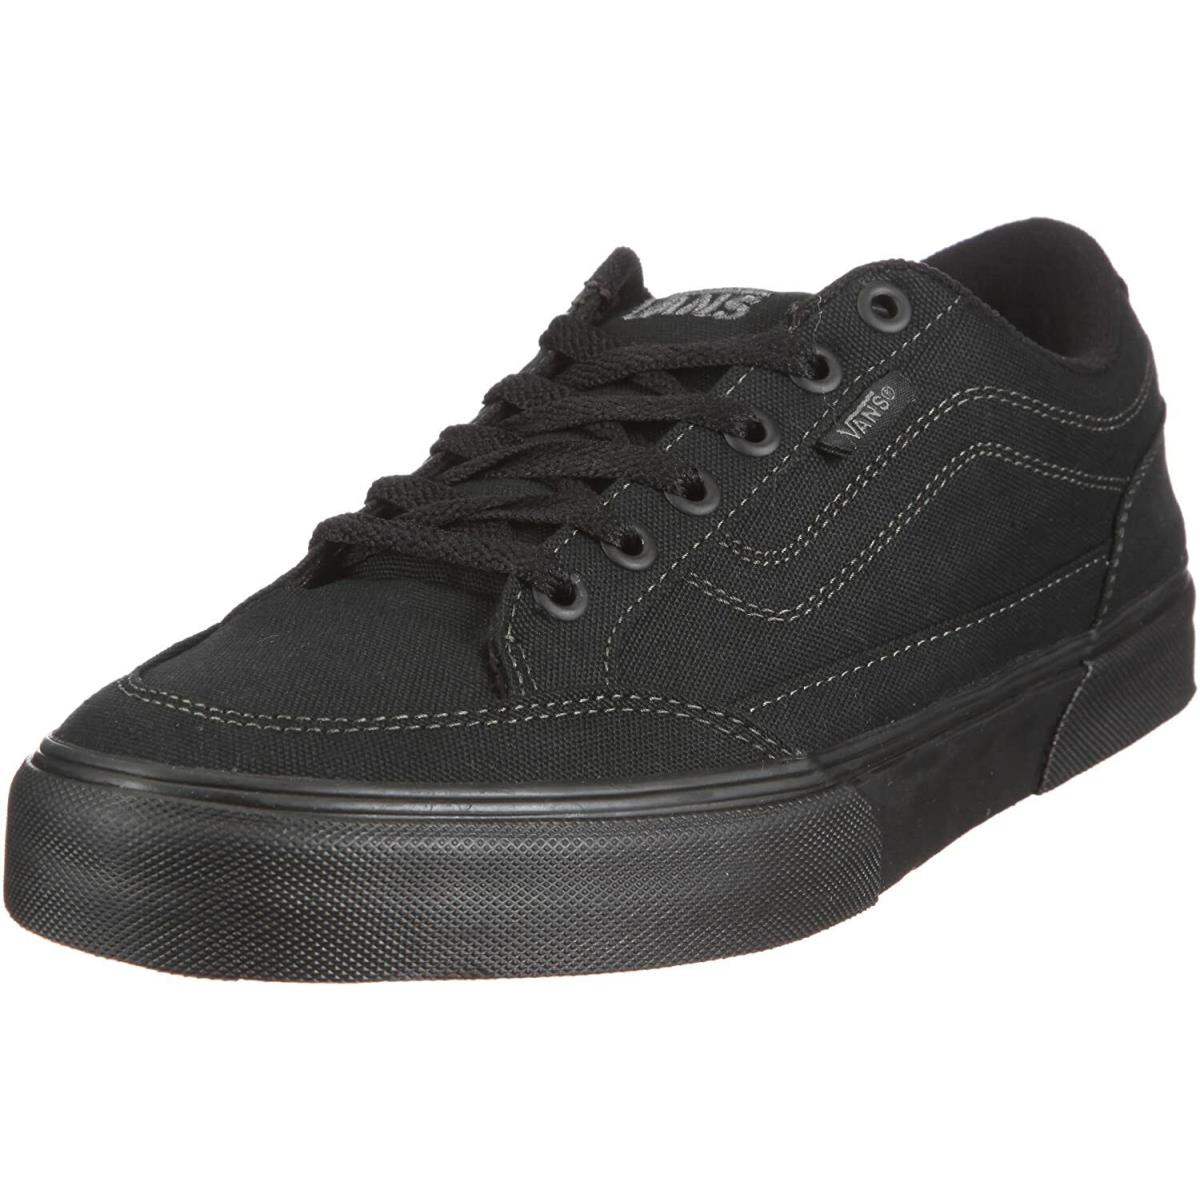 Vans Bearcat Canvas Black Skate Shoes Mens 10.5 Fast - Black